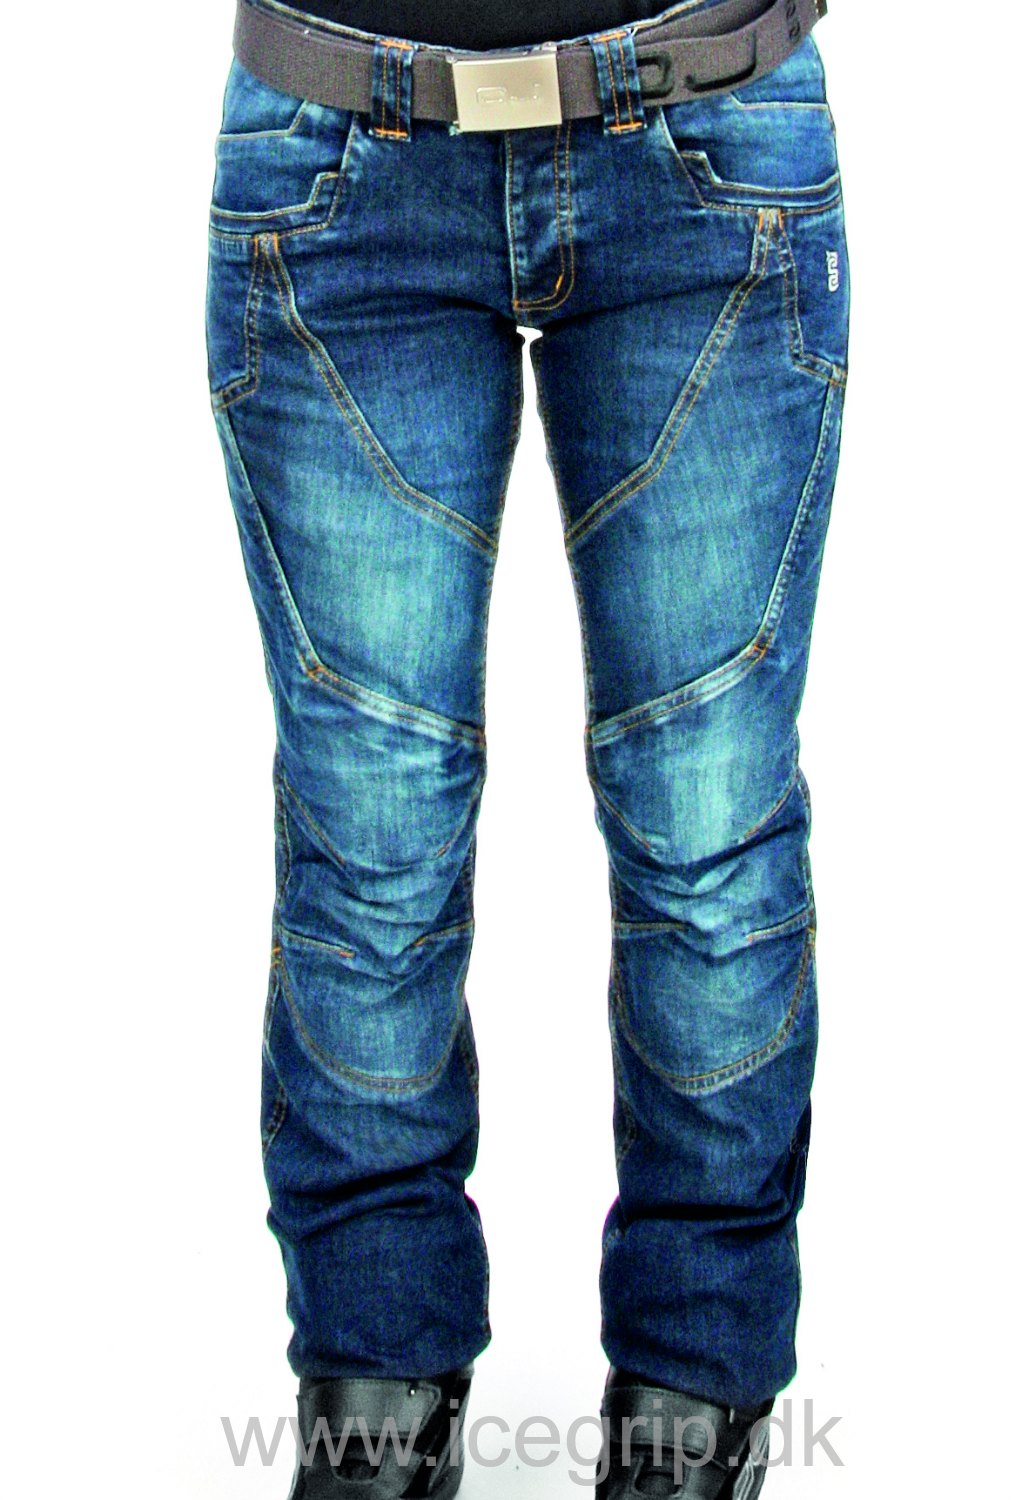 Bering strædet tunnel karakter MC jeans DAME blå | kevlar | pige model | aramid beskyttelse